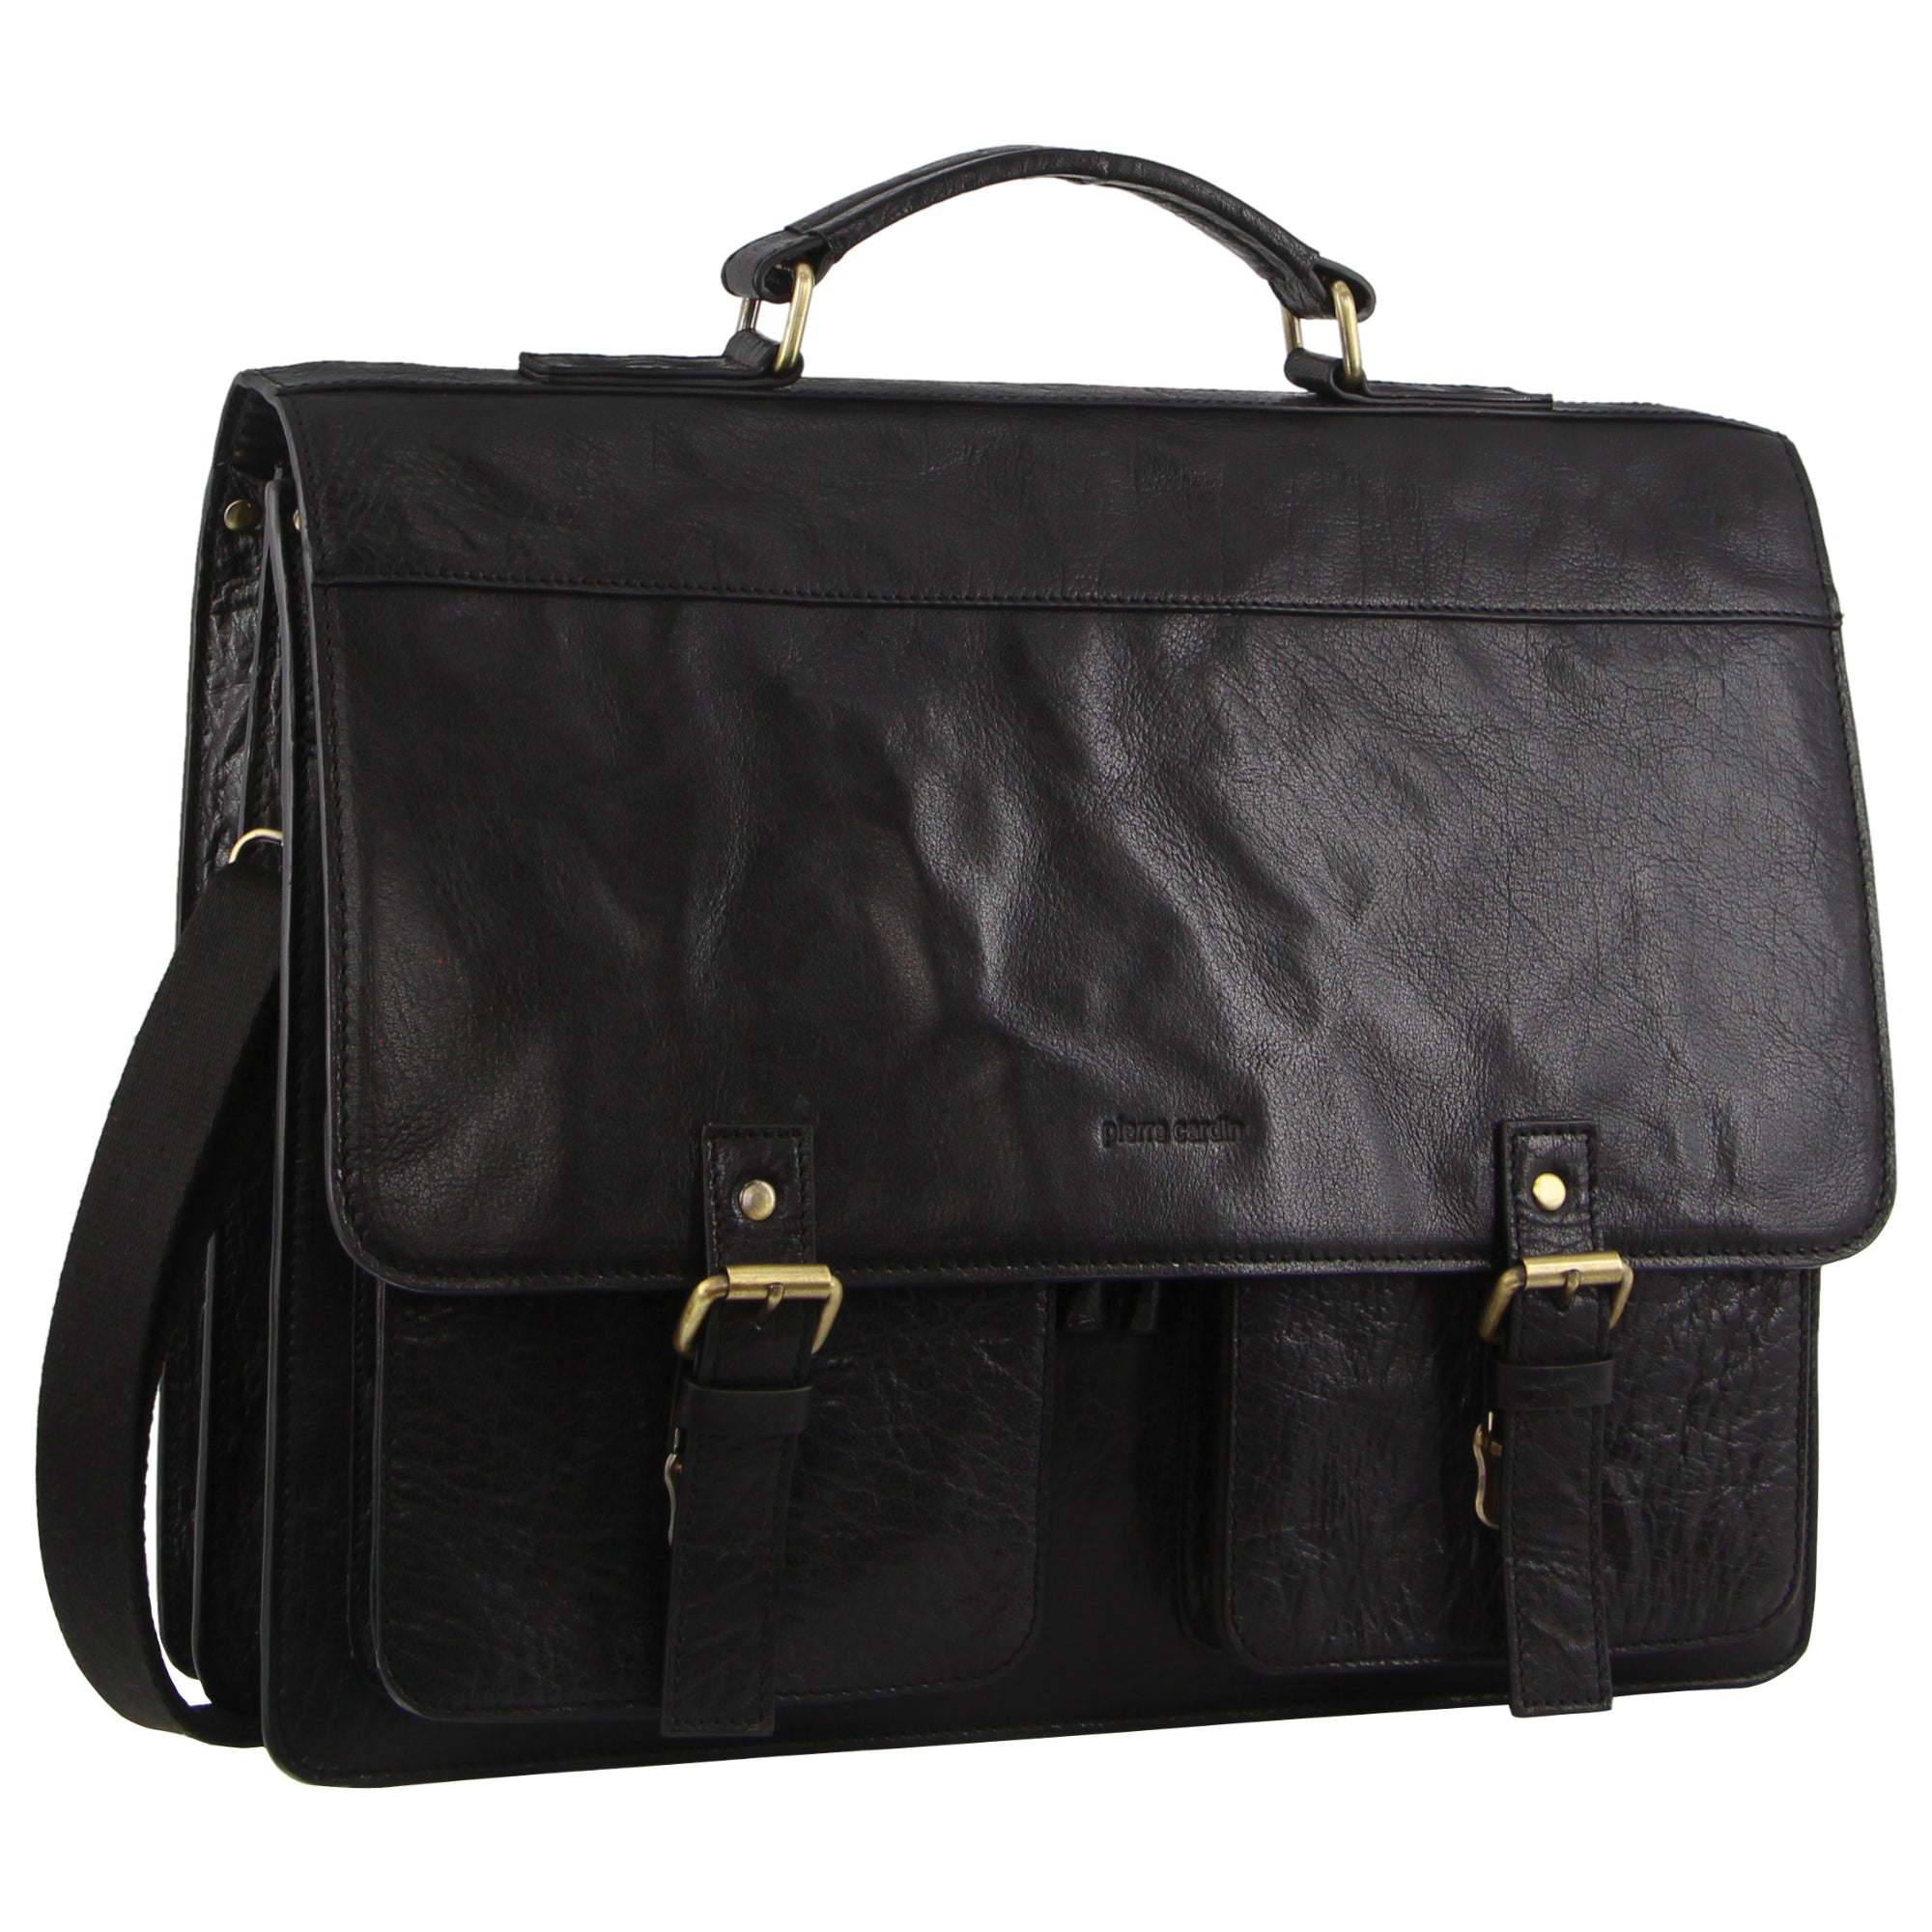 Pierre Cardin Men's Leather Business/Computer Bag in Black